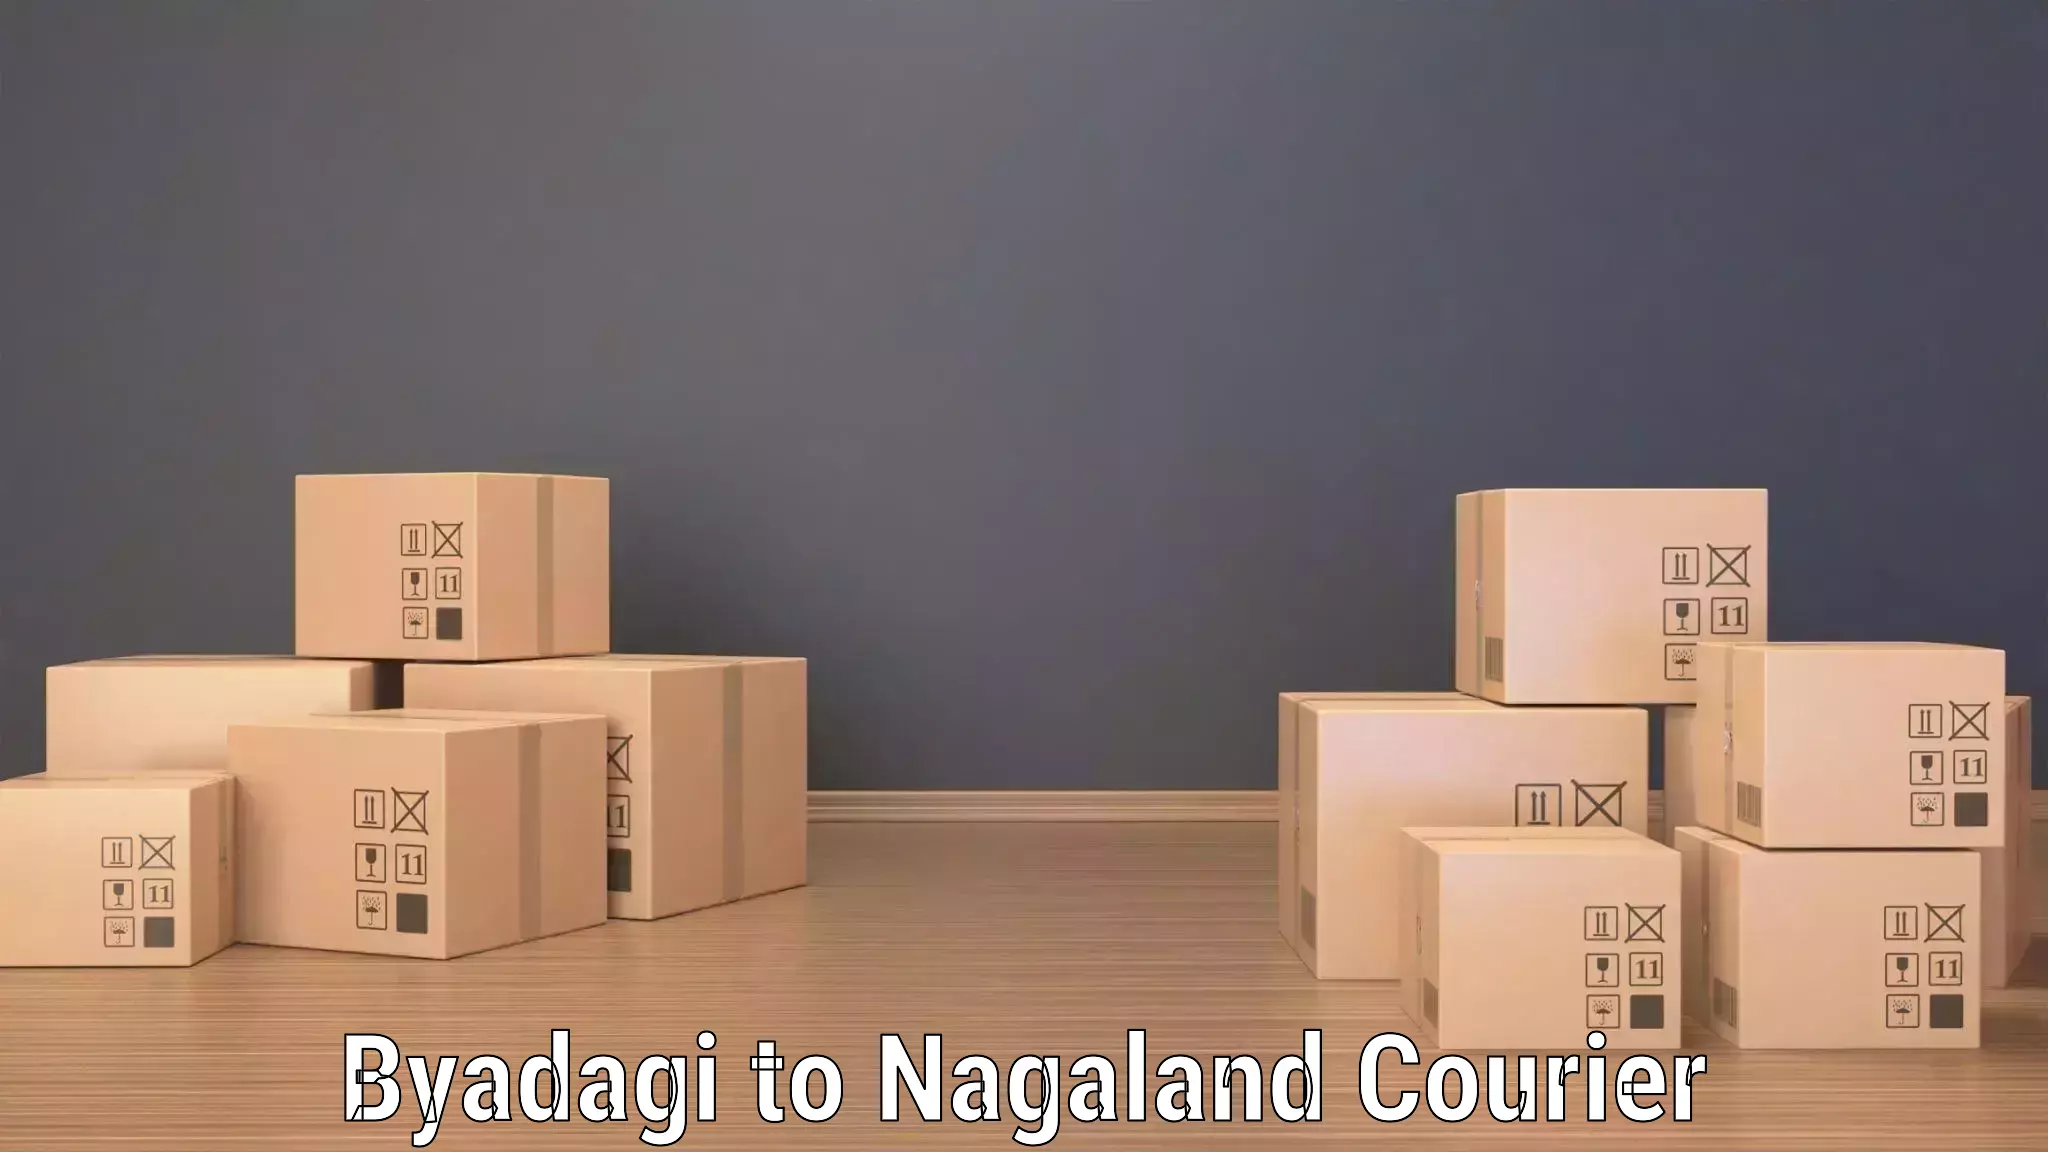 International courier networks Byadagi to Nagaland